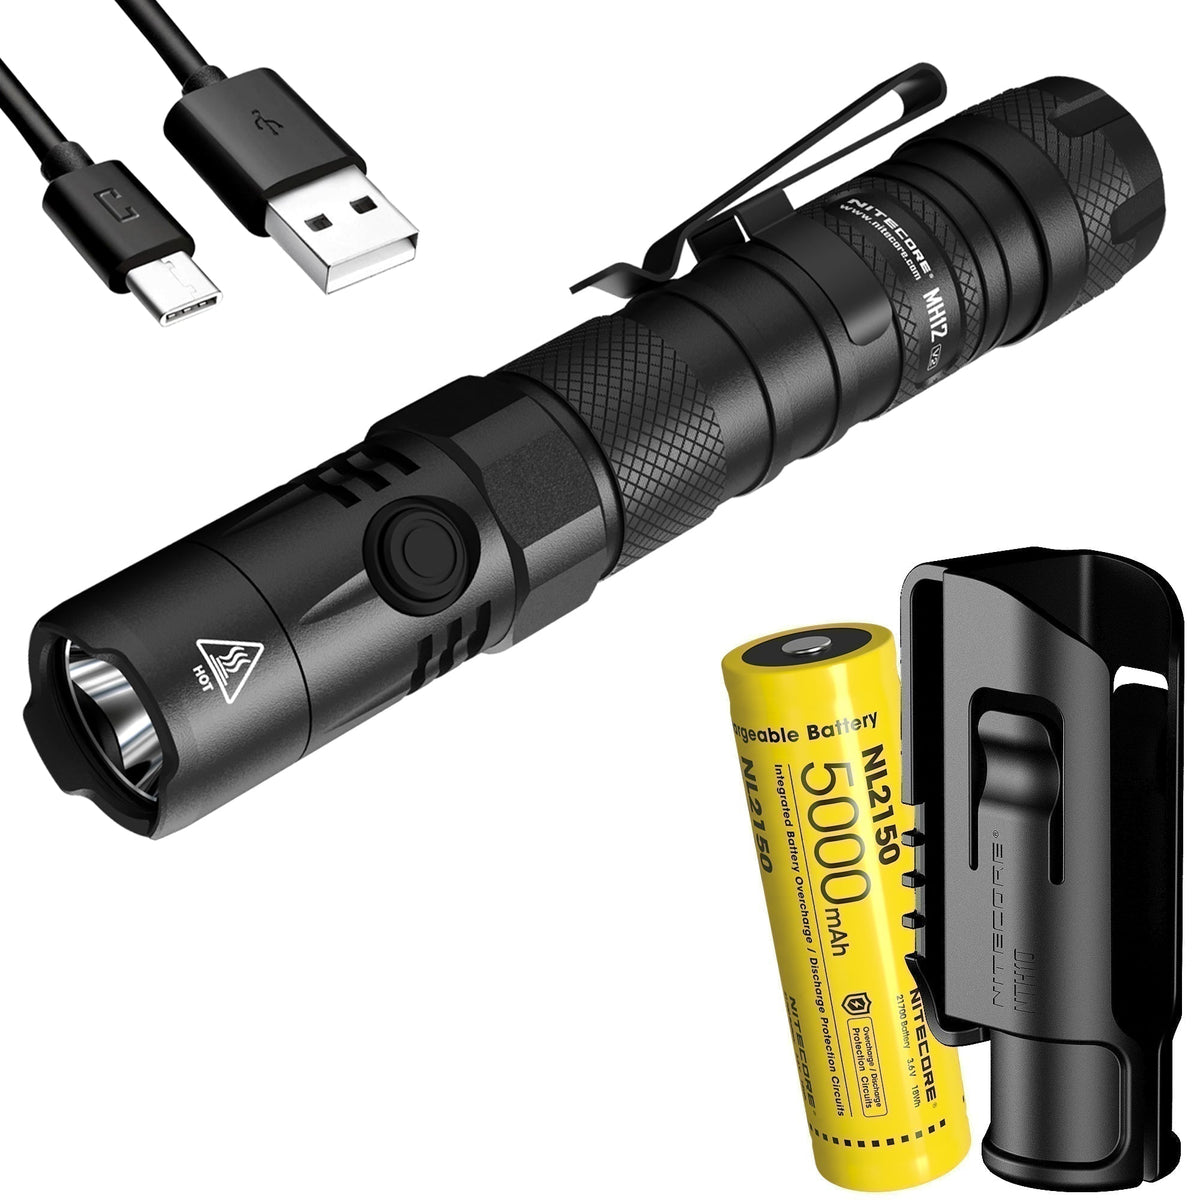 Flashlights & Headlamps - Nitecore MH12 V2 1200 Lumen USB-C Rechargeable Flashlight